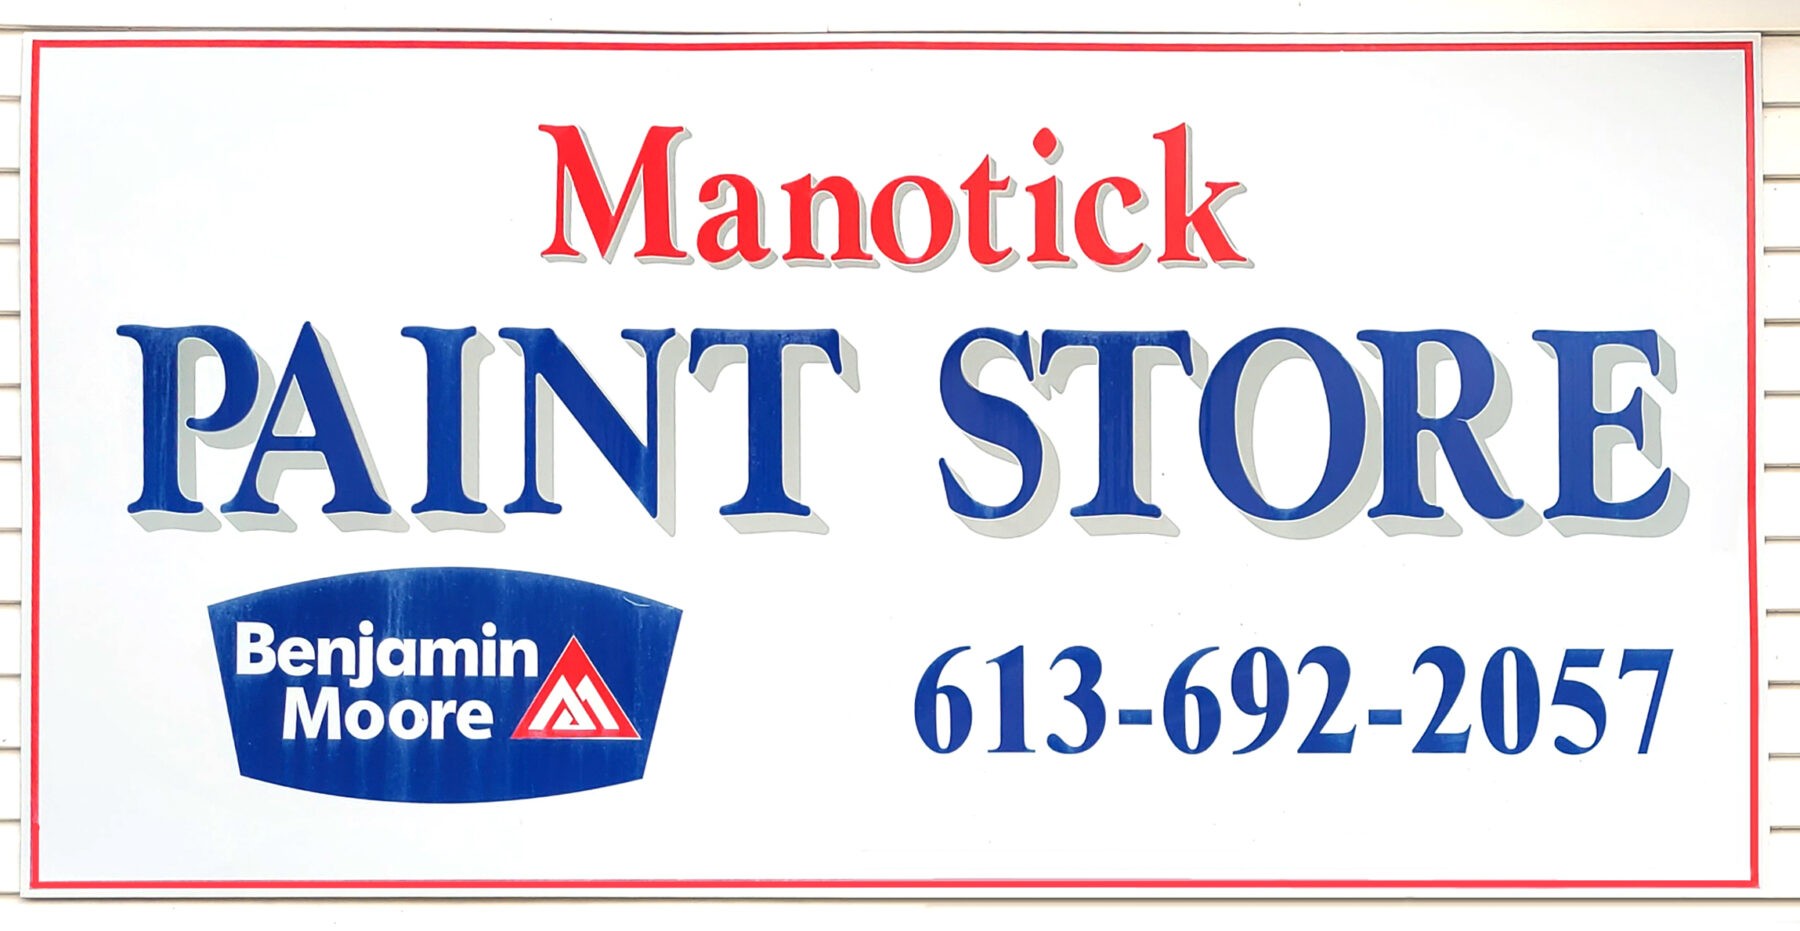 Manotick Paint Store logo - Business in Manotick